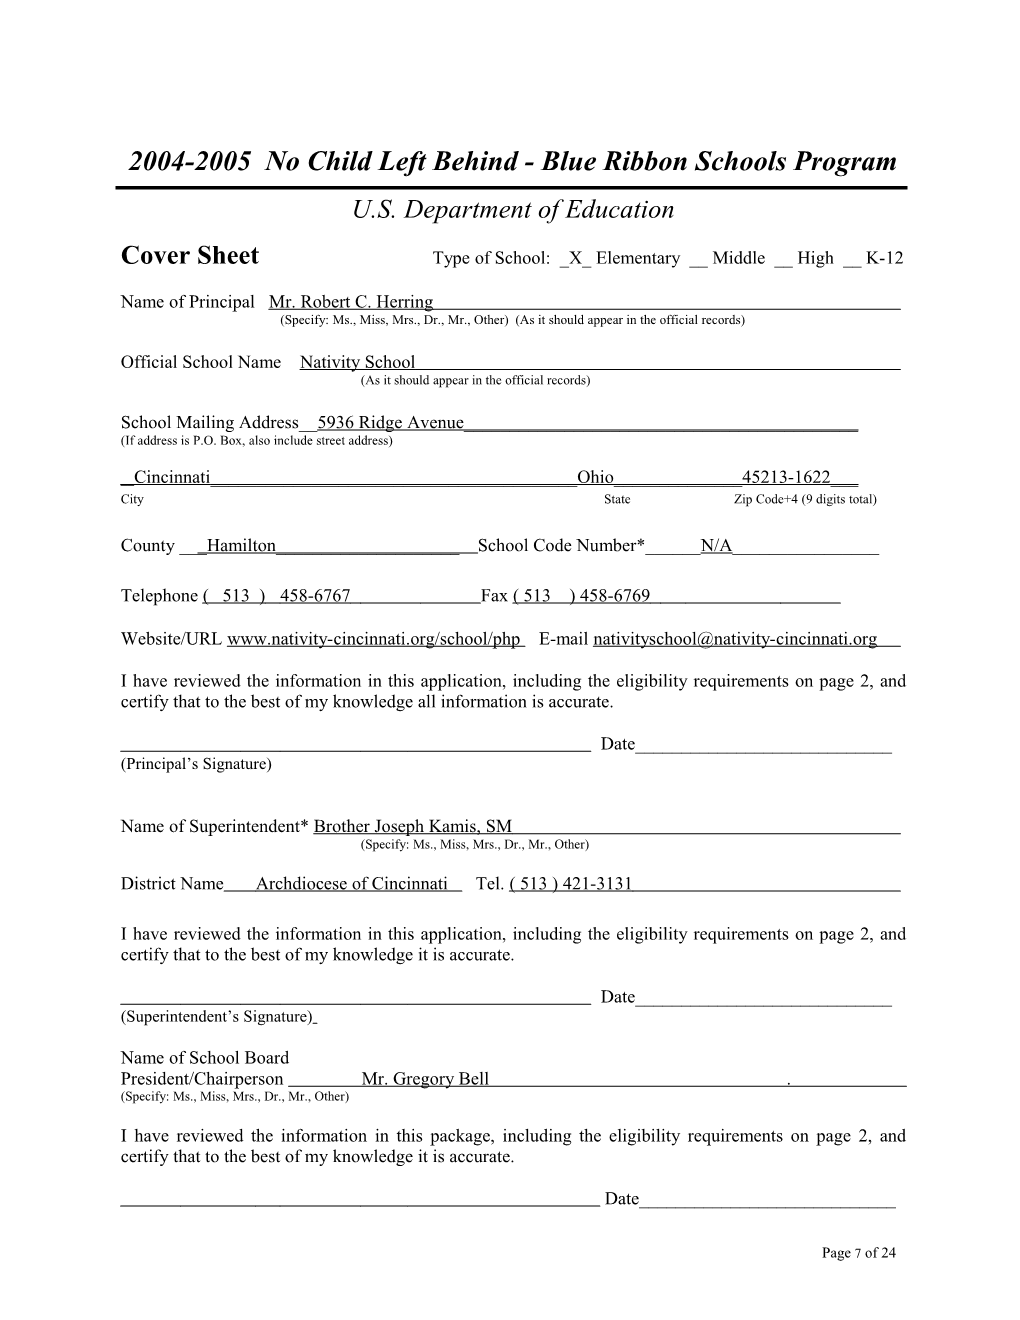 Nativity School Application: 2004-2005, No Child Left Behind - Blue Ribbon Schools Program